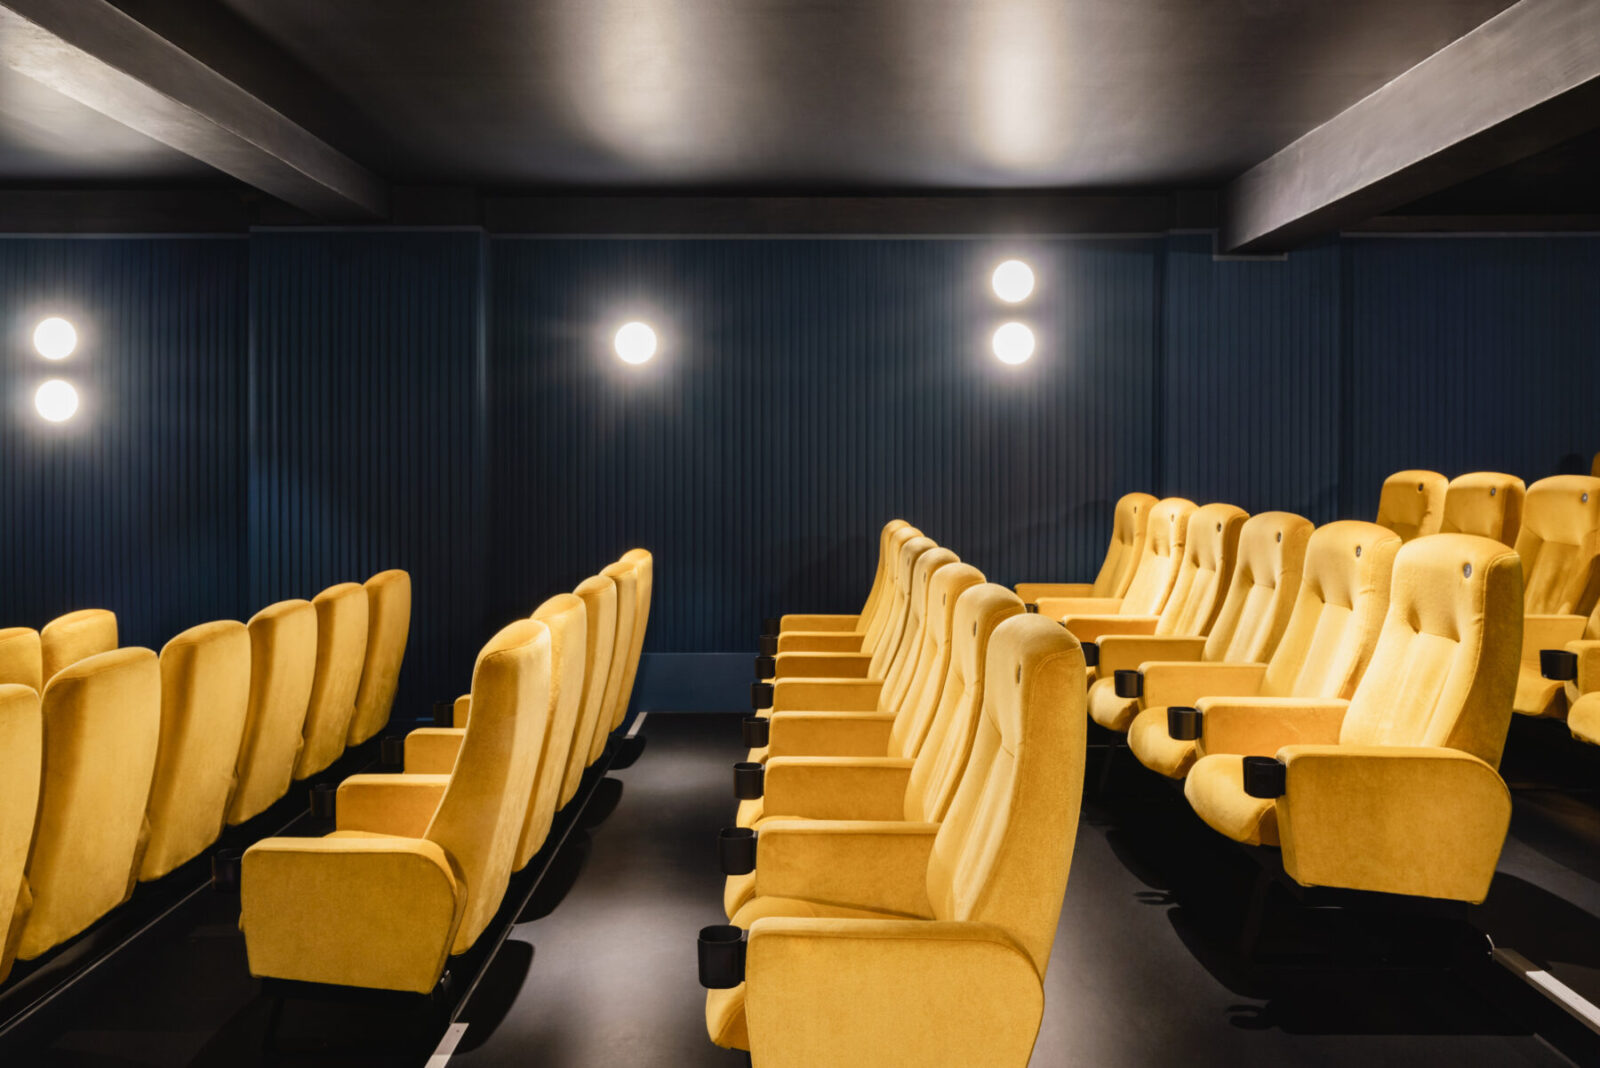 Archisearch BATEK ARCHITEKTEN completes renovation of the historic Yorck Kino Passage cinema in Berlin